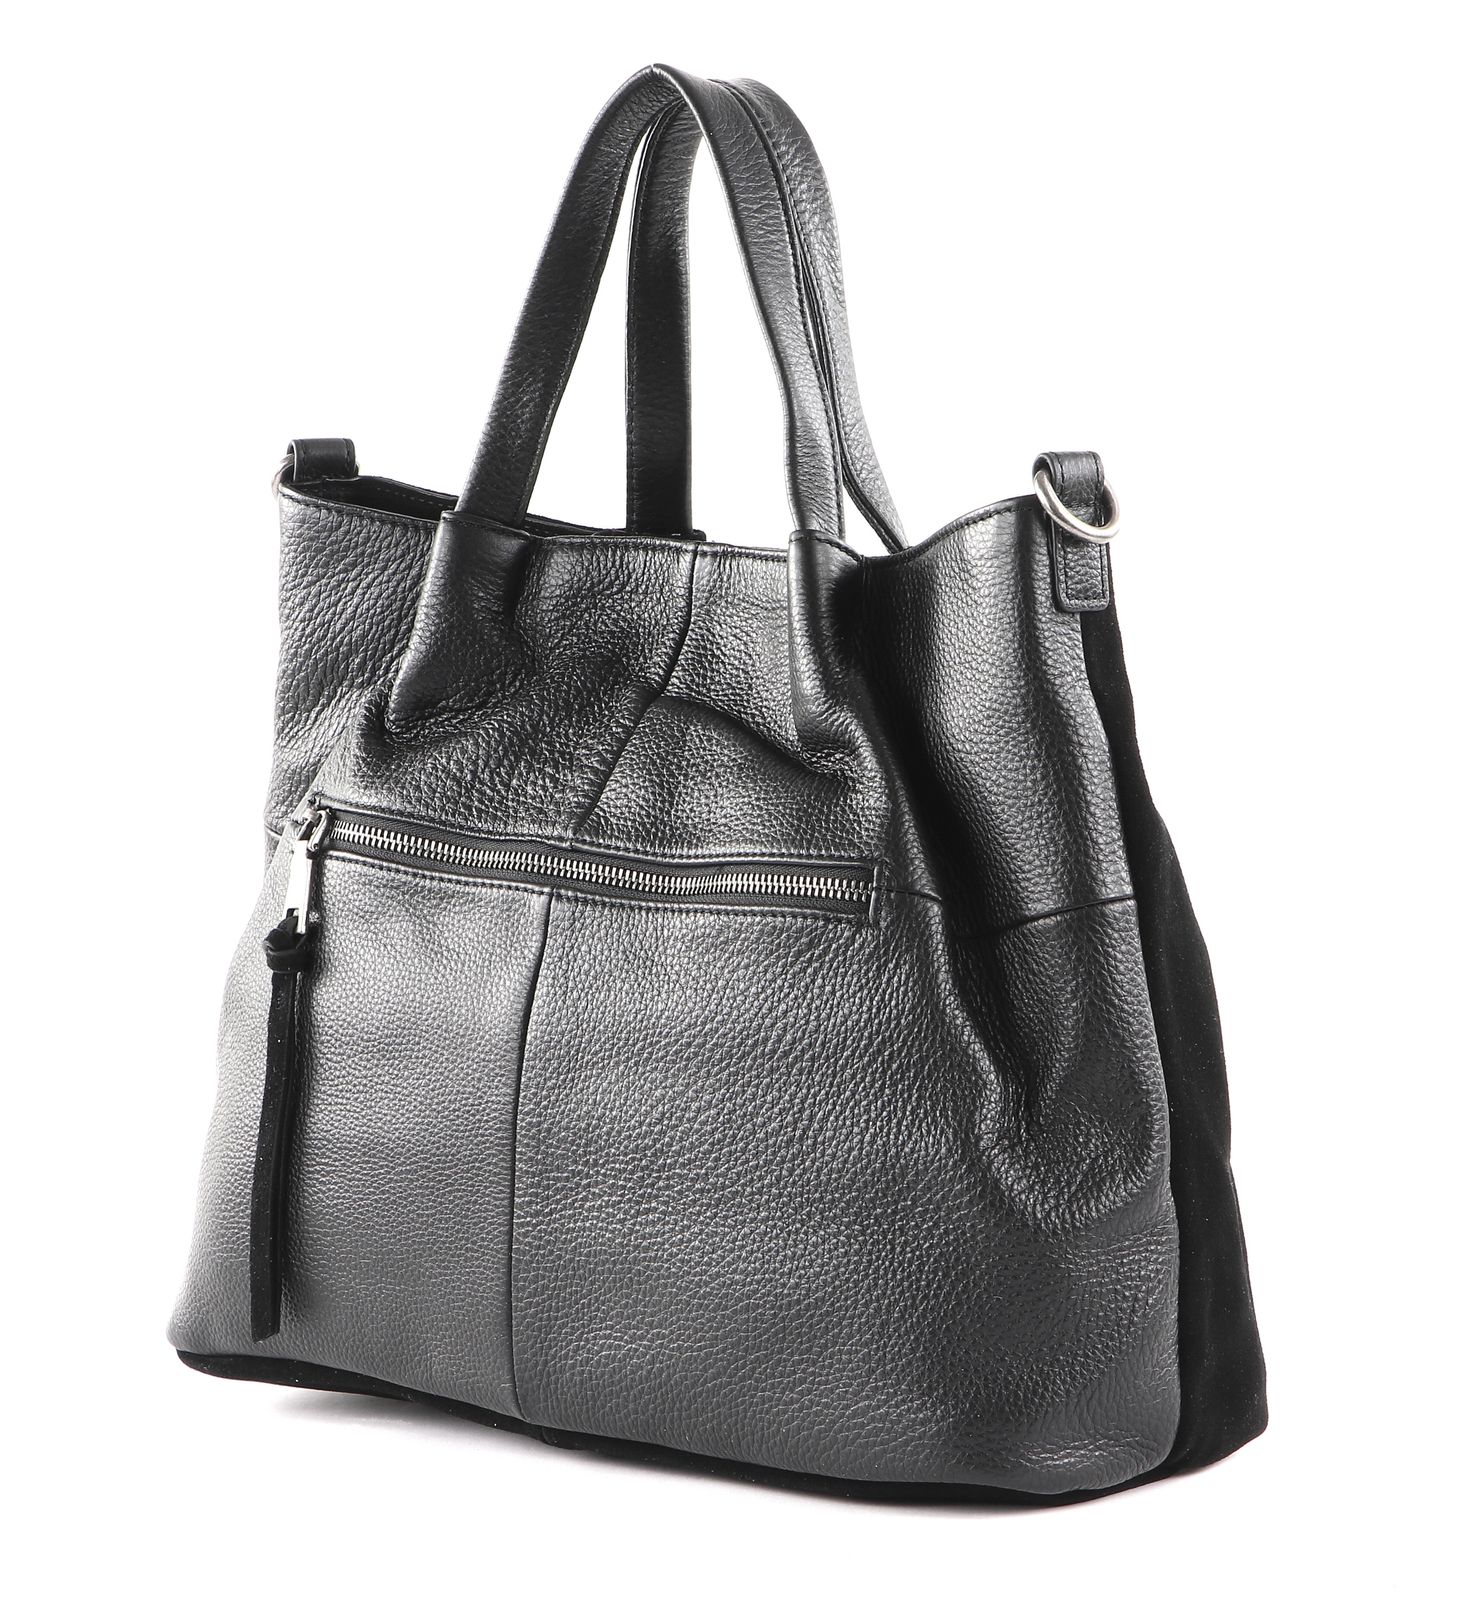 FREDsBRUDER Sylvin Tote Bag Black | Buy bags, purses & accessories ...